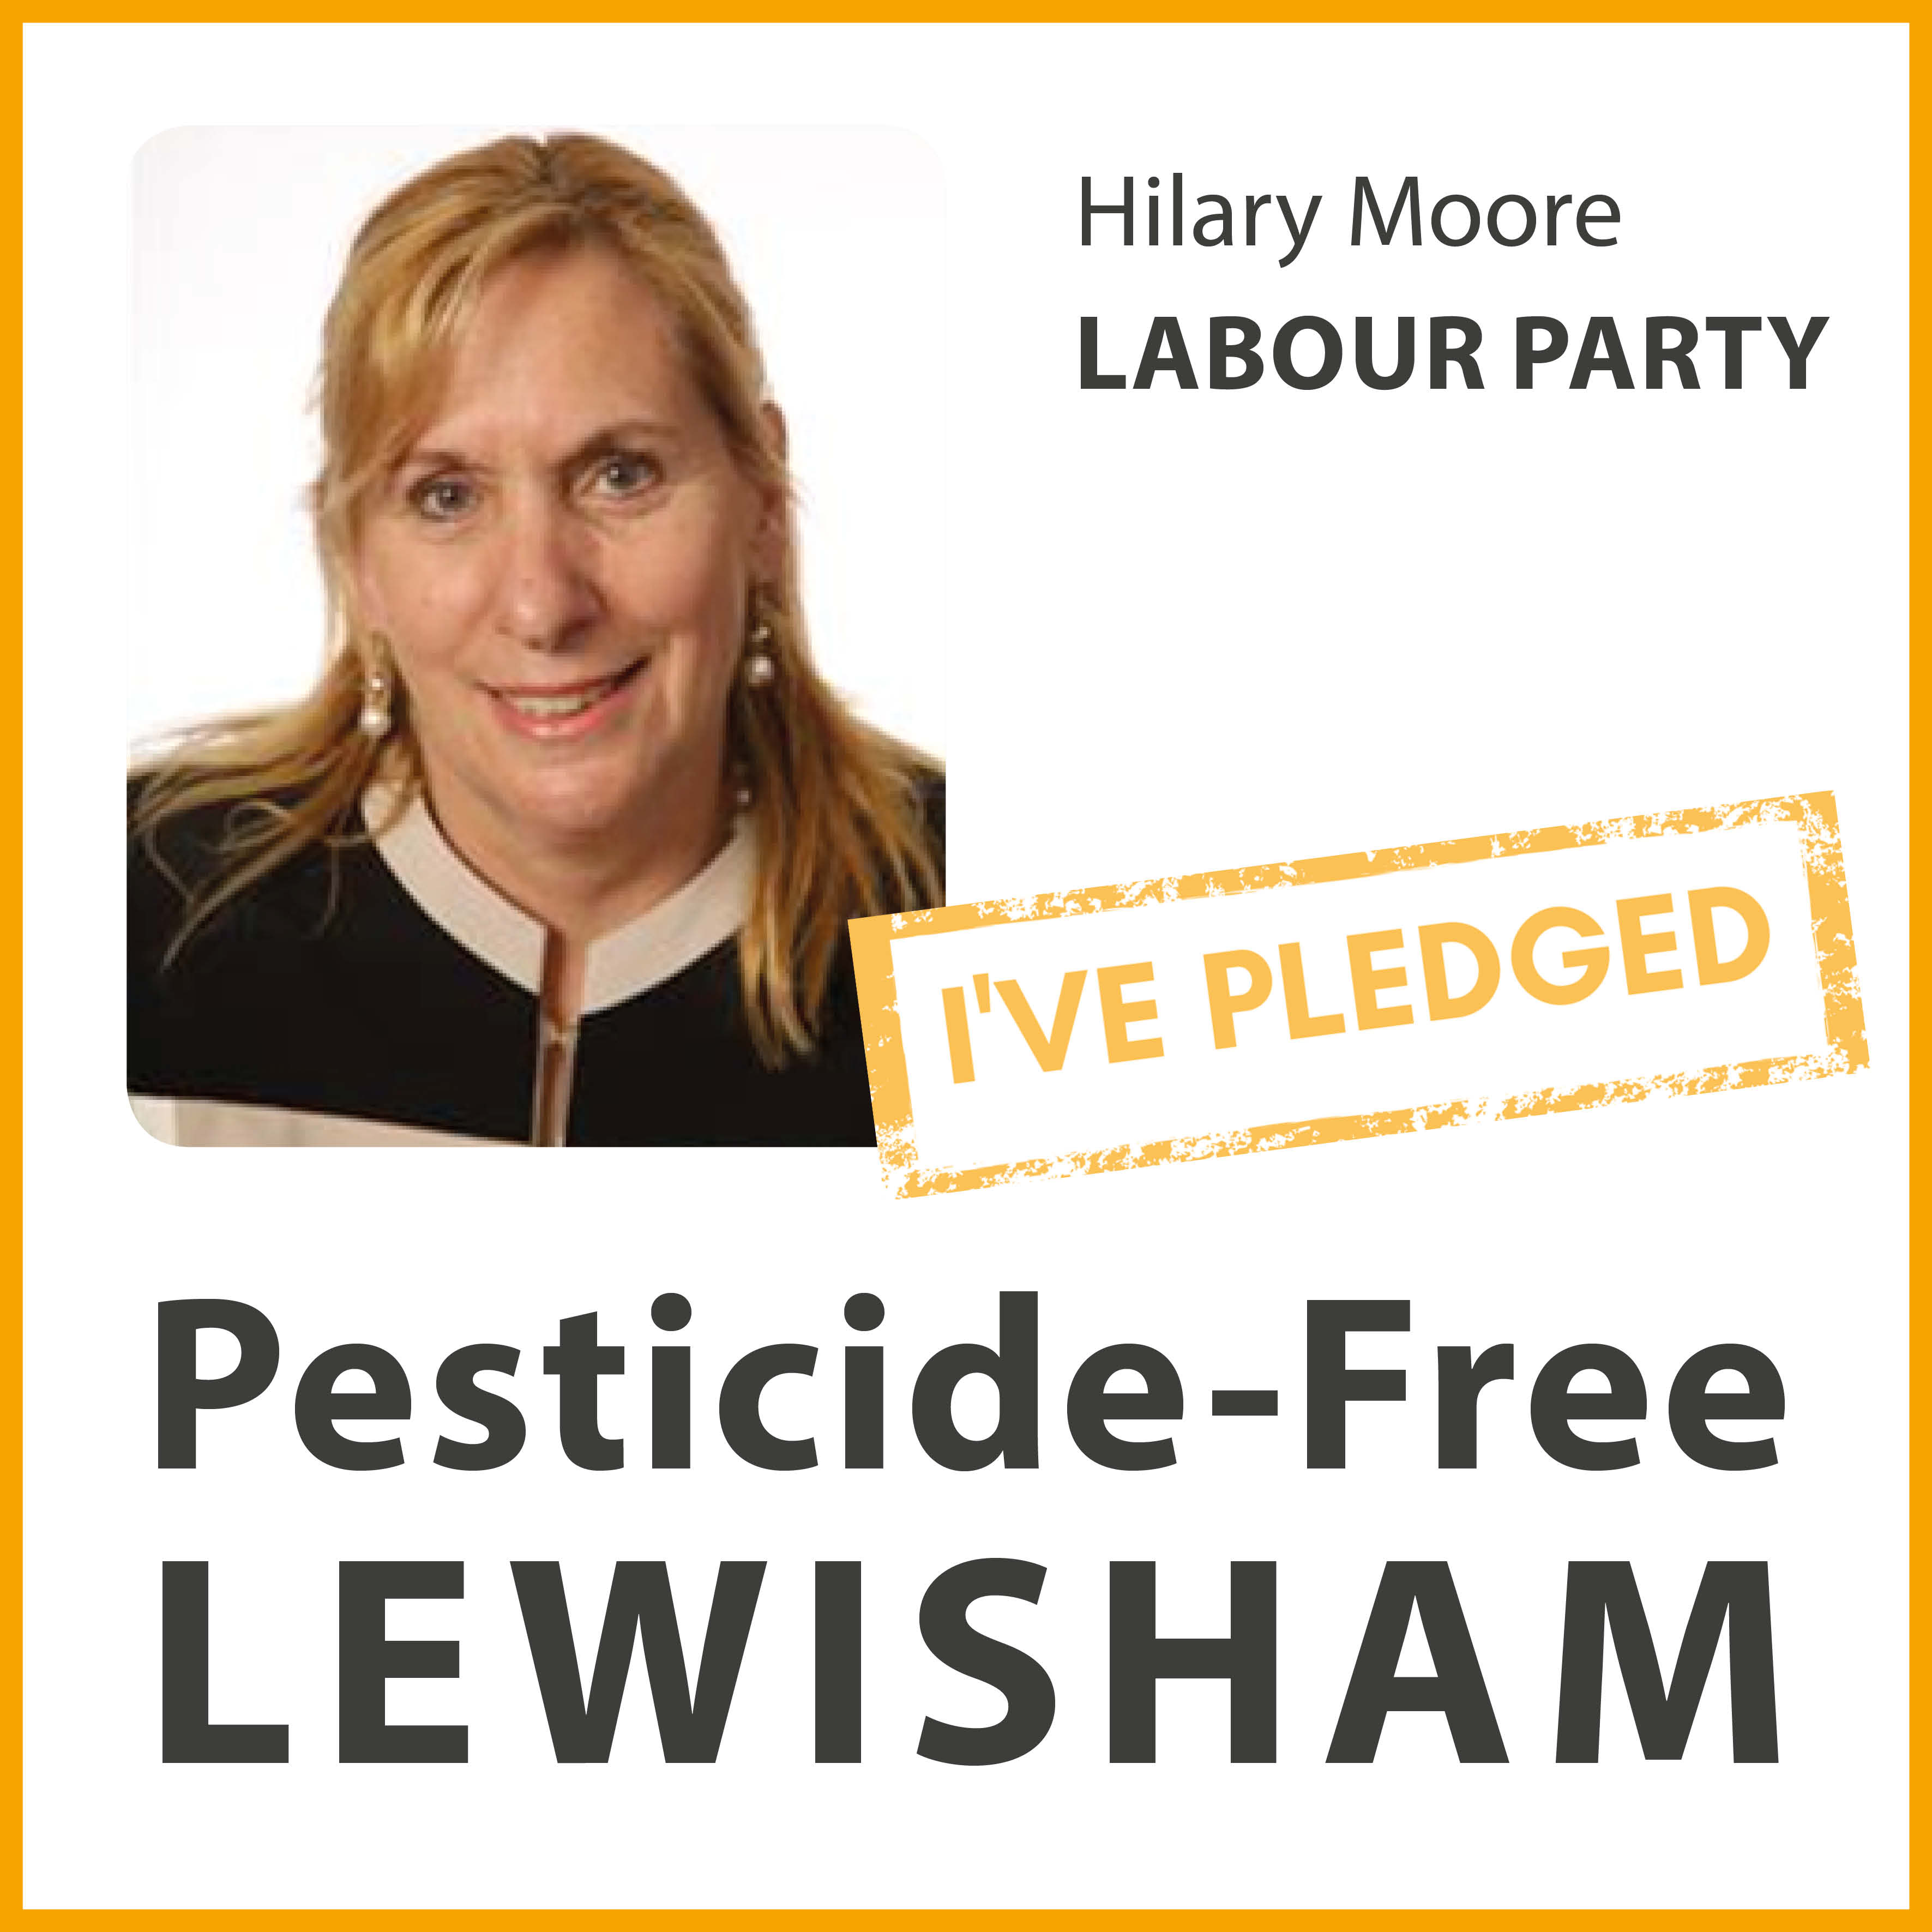 Hilary Moore has taken the pesticide-free pledge in Lewisham